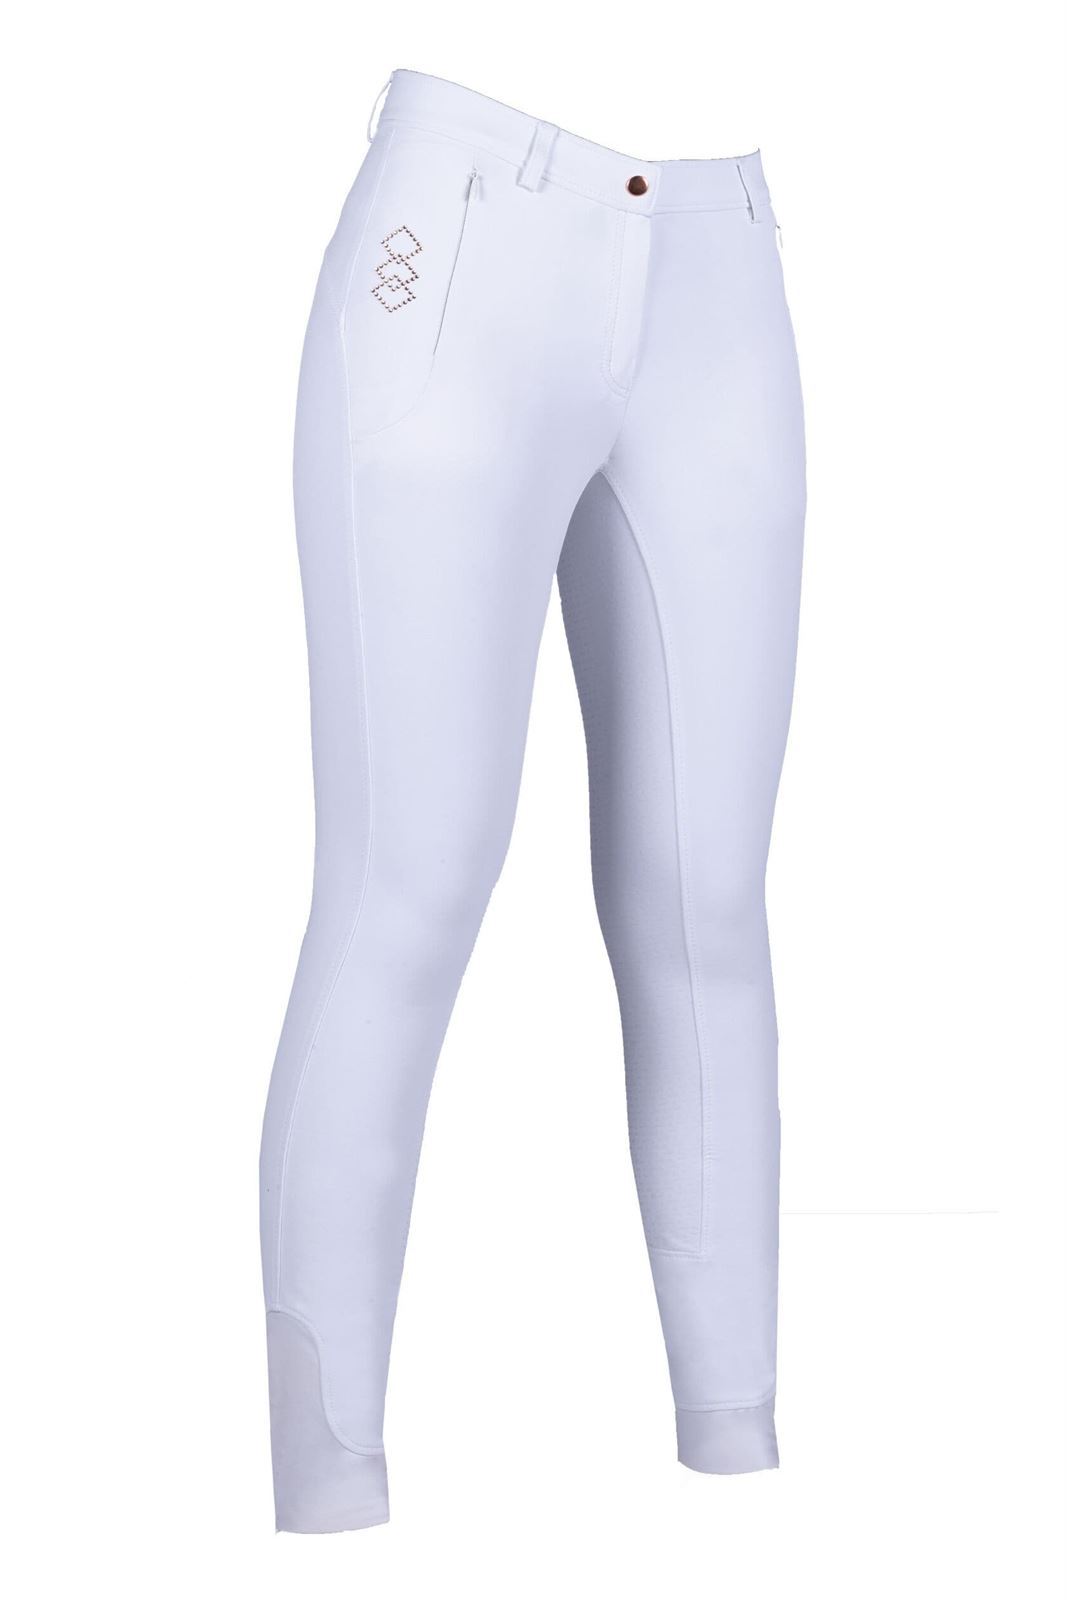 Pantalón mujer HKM Sports Equipment Alexis culera de grip, color blanco - Imagen 6